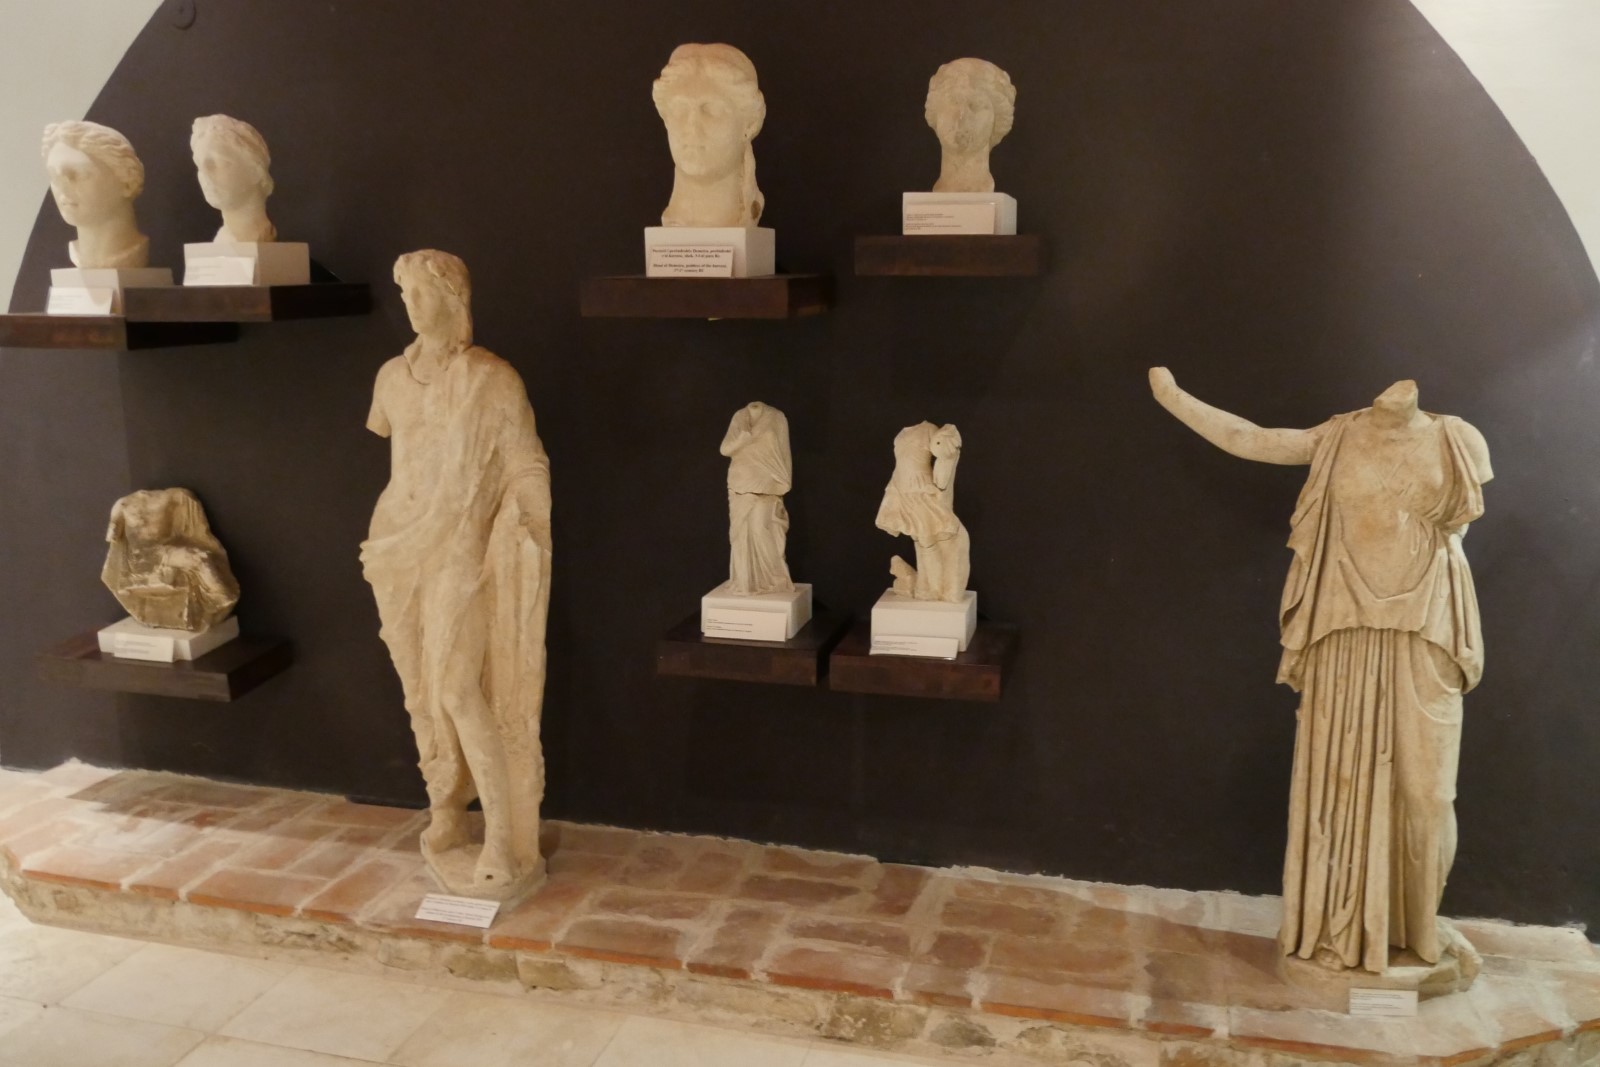 Muzeu Arkeologjik i Butrintit